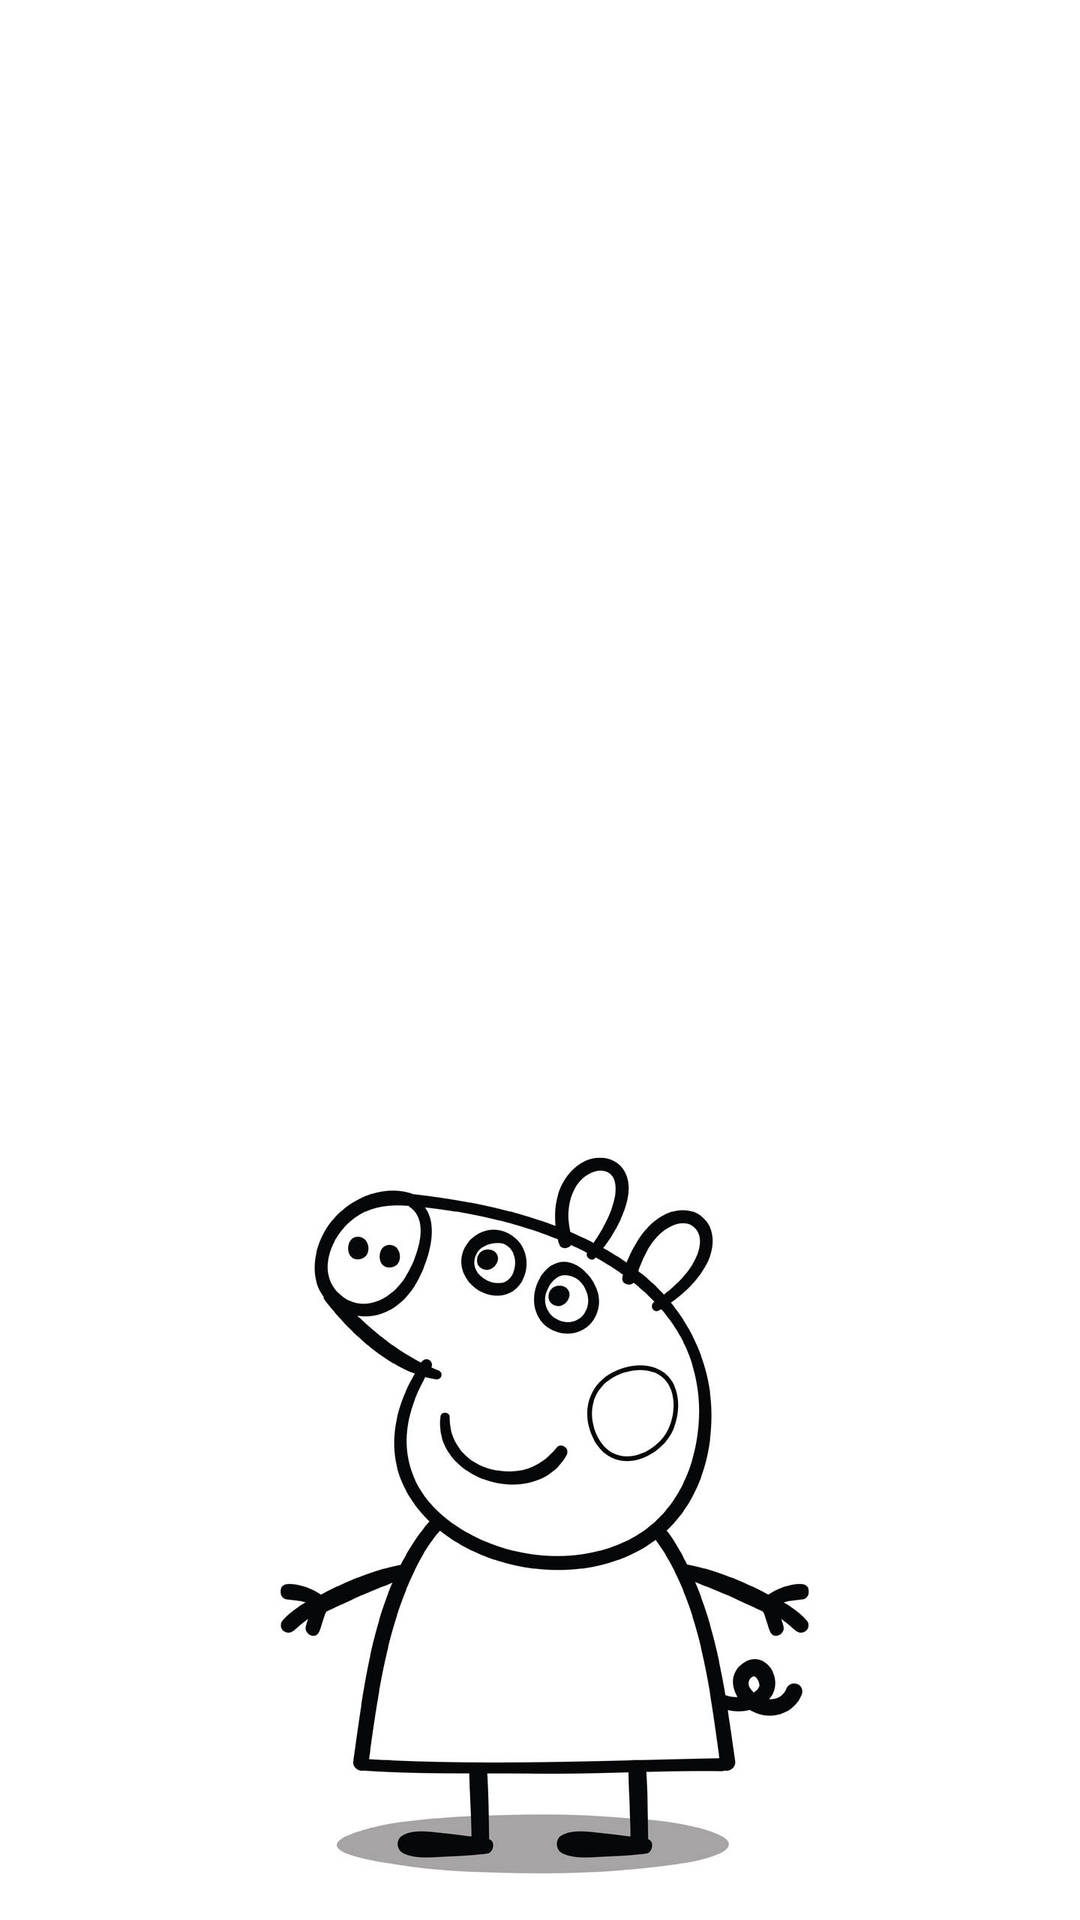 Download Peppa Pig Iphone Outline Sketch Wallpaper 